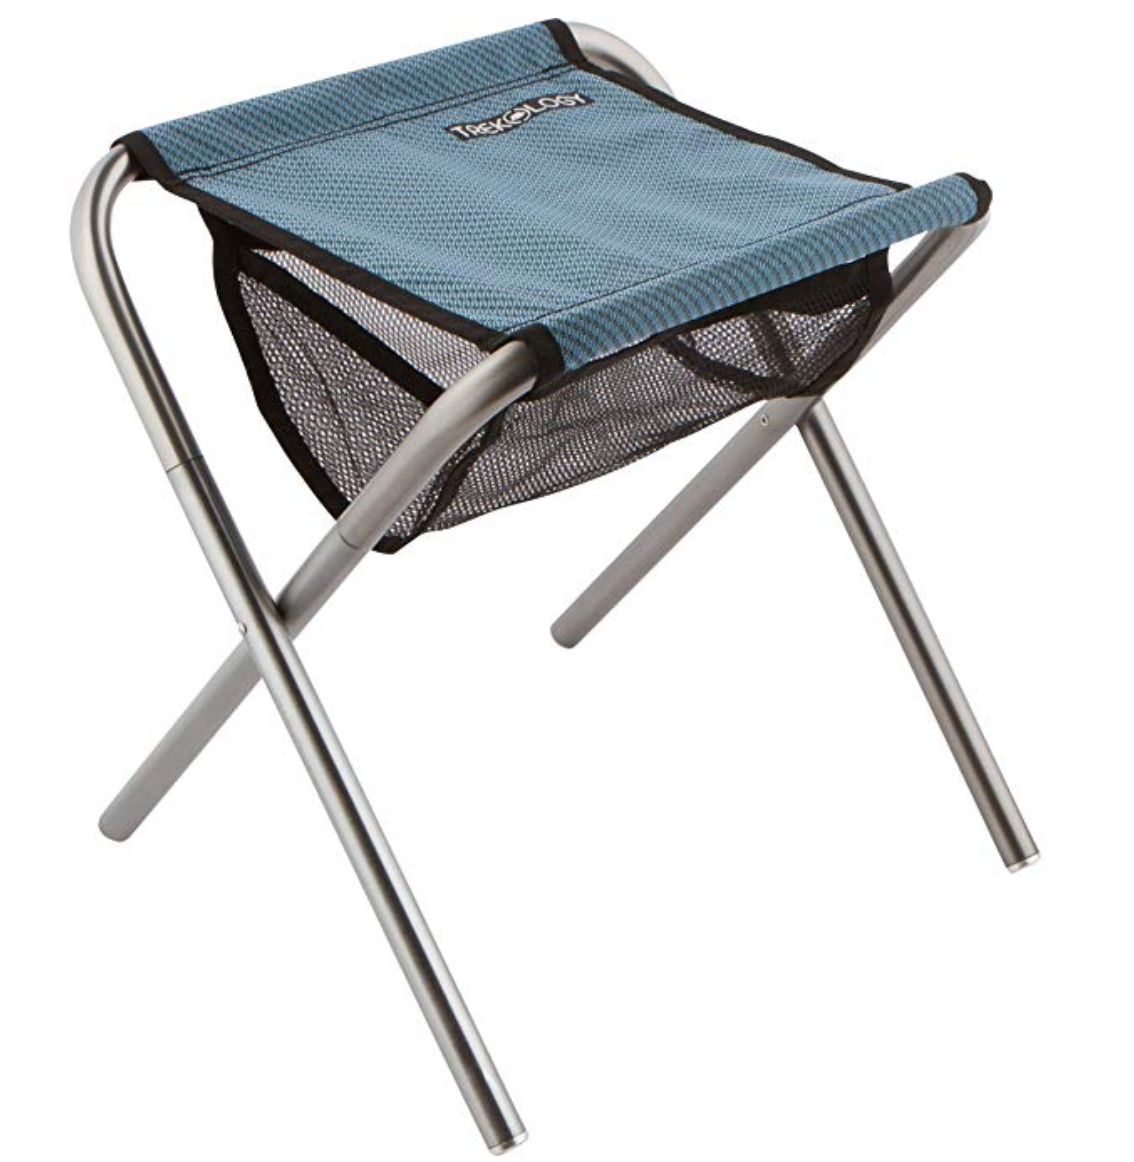 Portable Camping Stool on Amazon.com